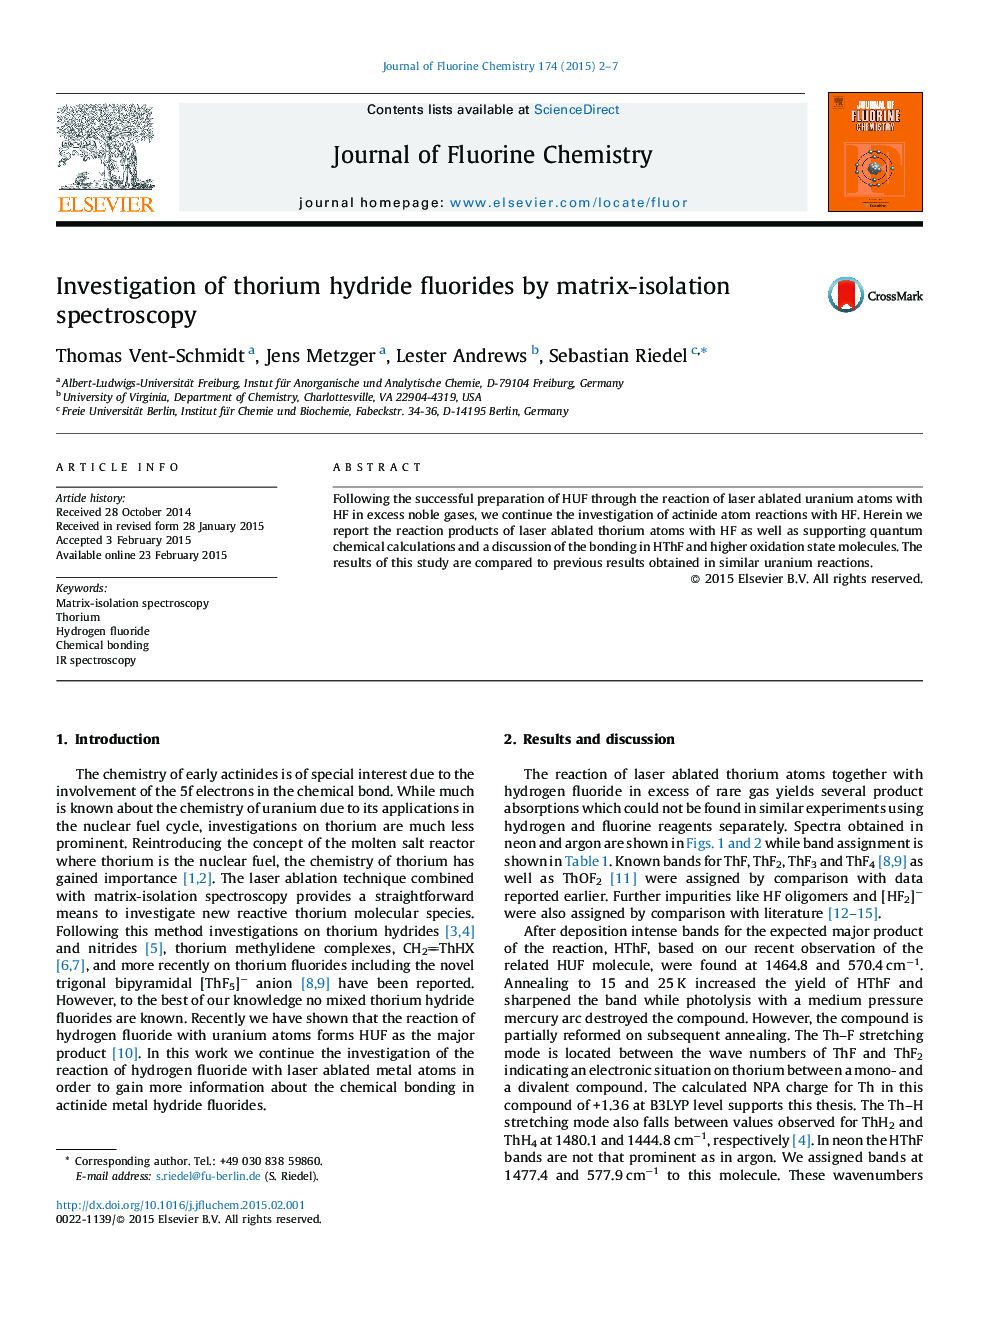 Investigation of thorium hydride fluorides by matrix-isolation spectroscopy